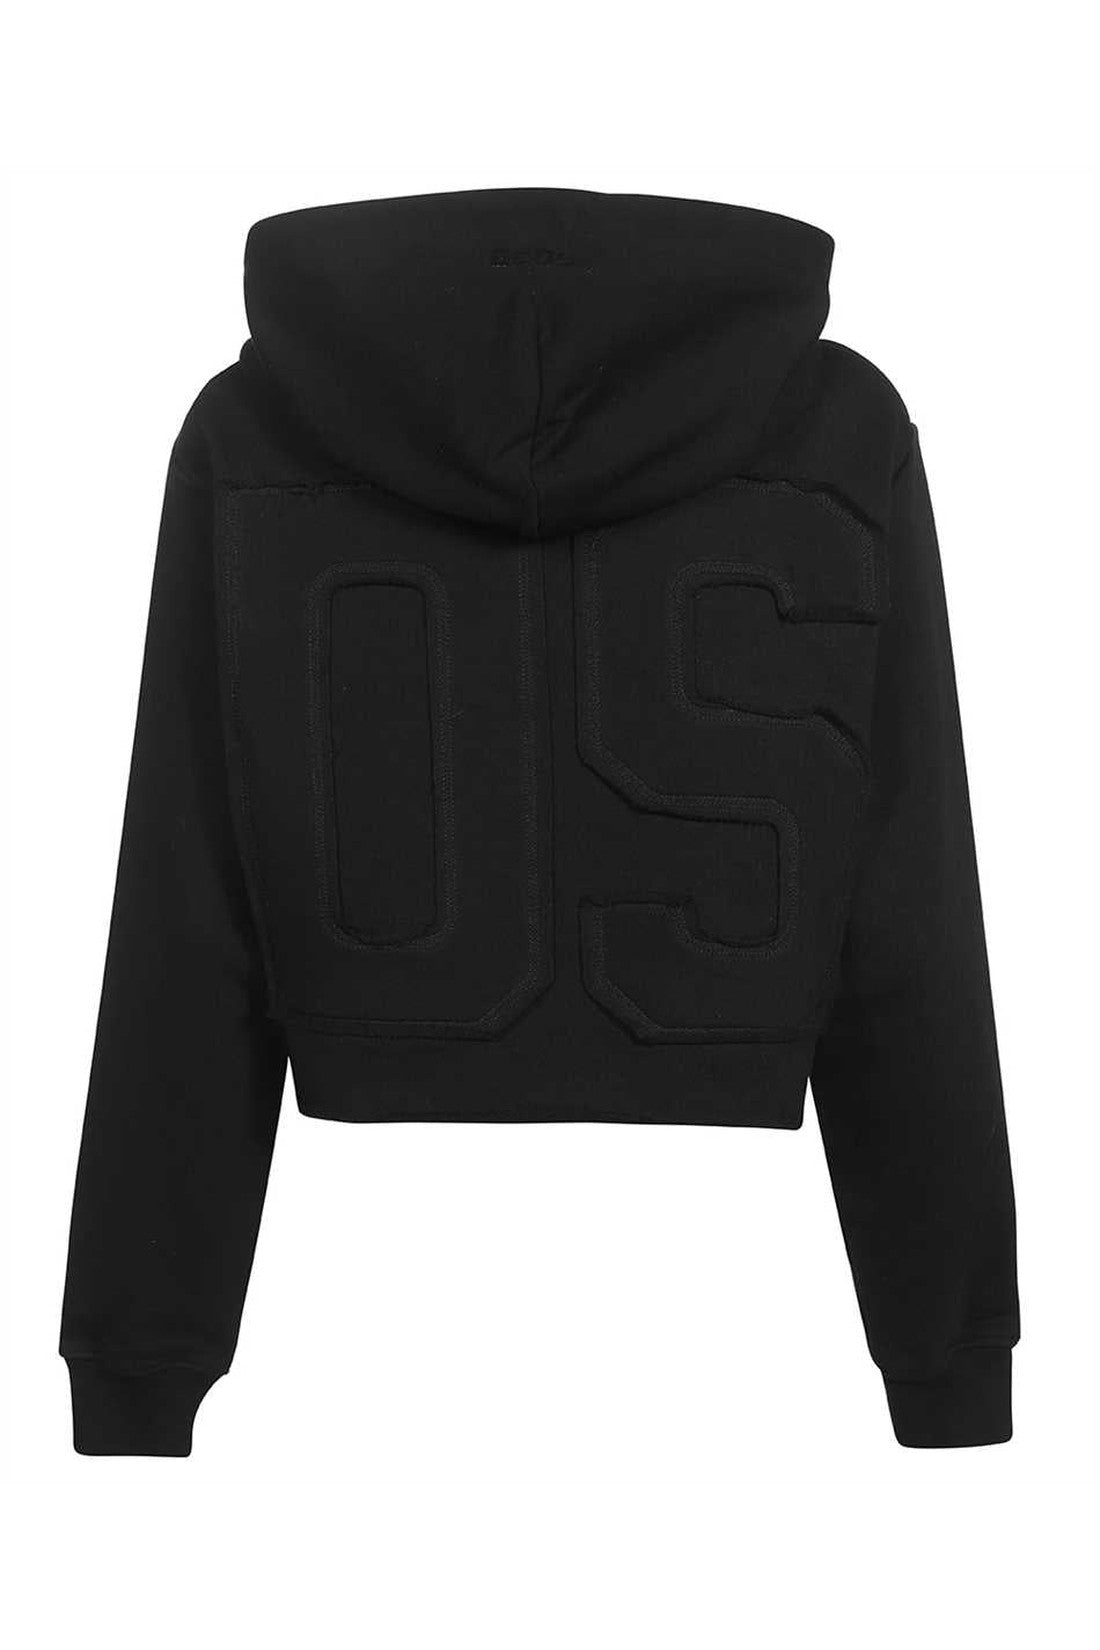 Hooded sweatshirt-GCDS-OUTLET-SALE-ARCHIVIST